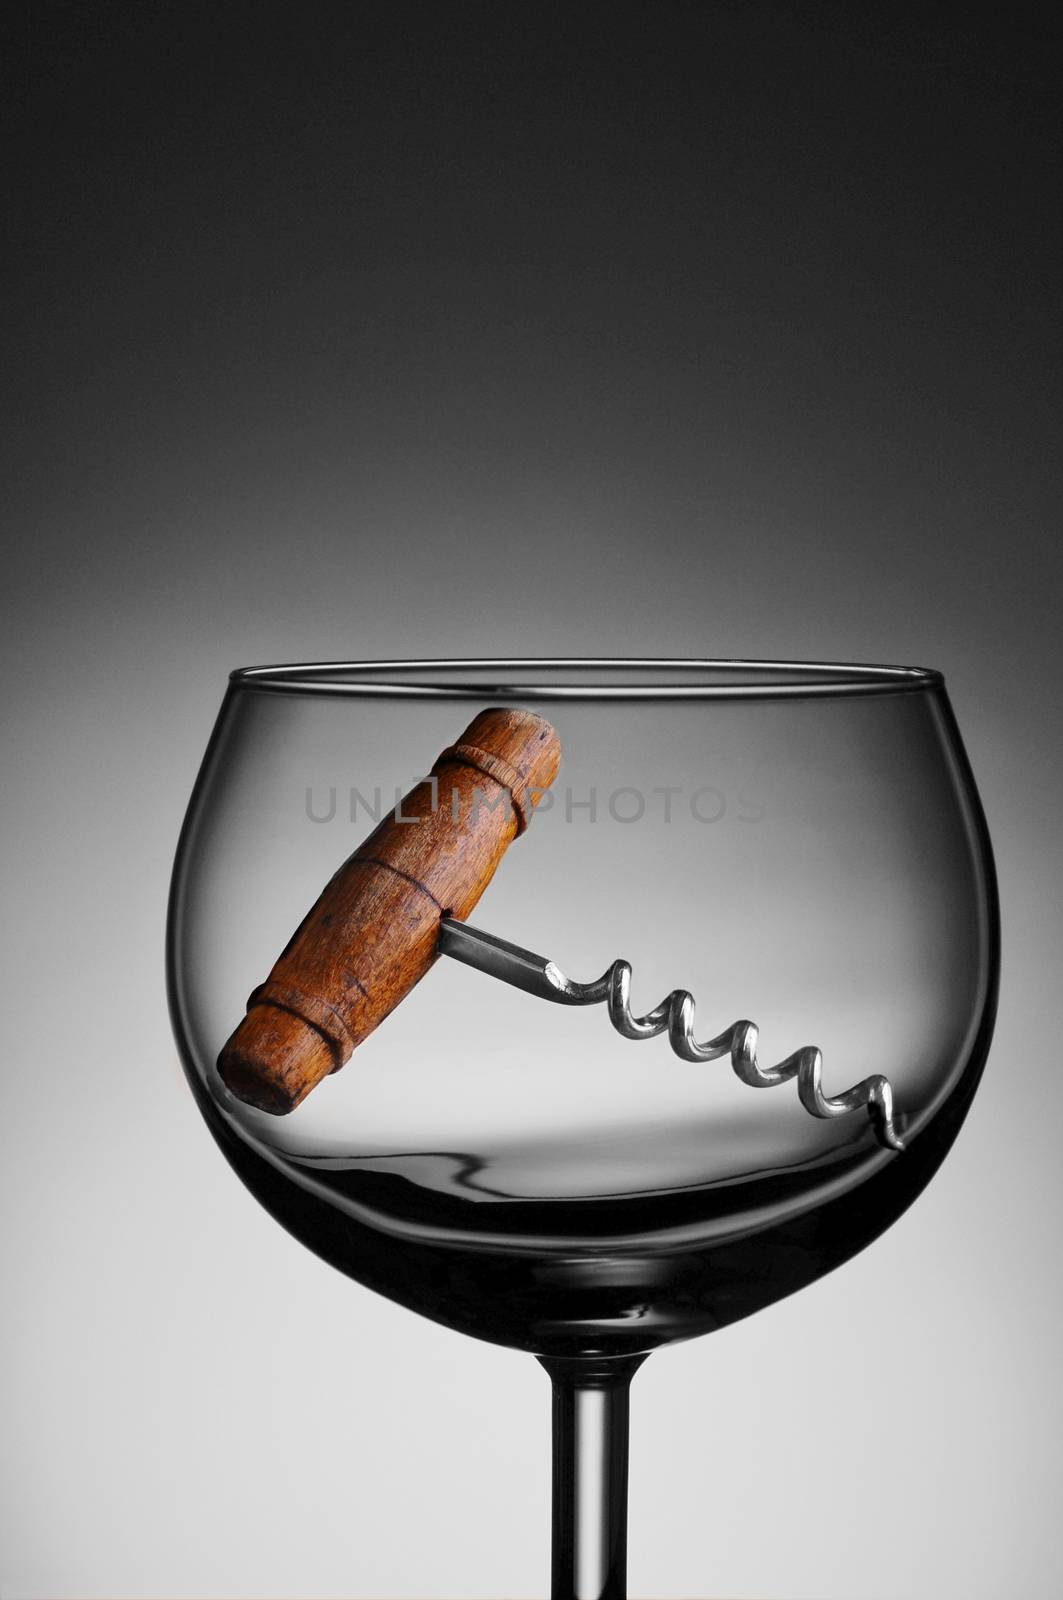 Old Cork Screwn in Wine Glass by sCukrov